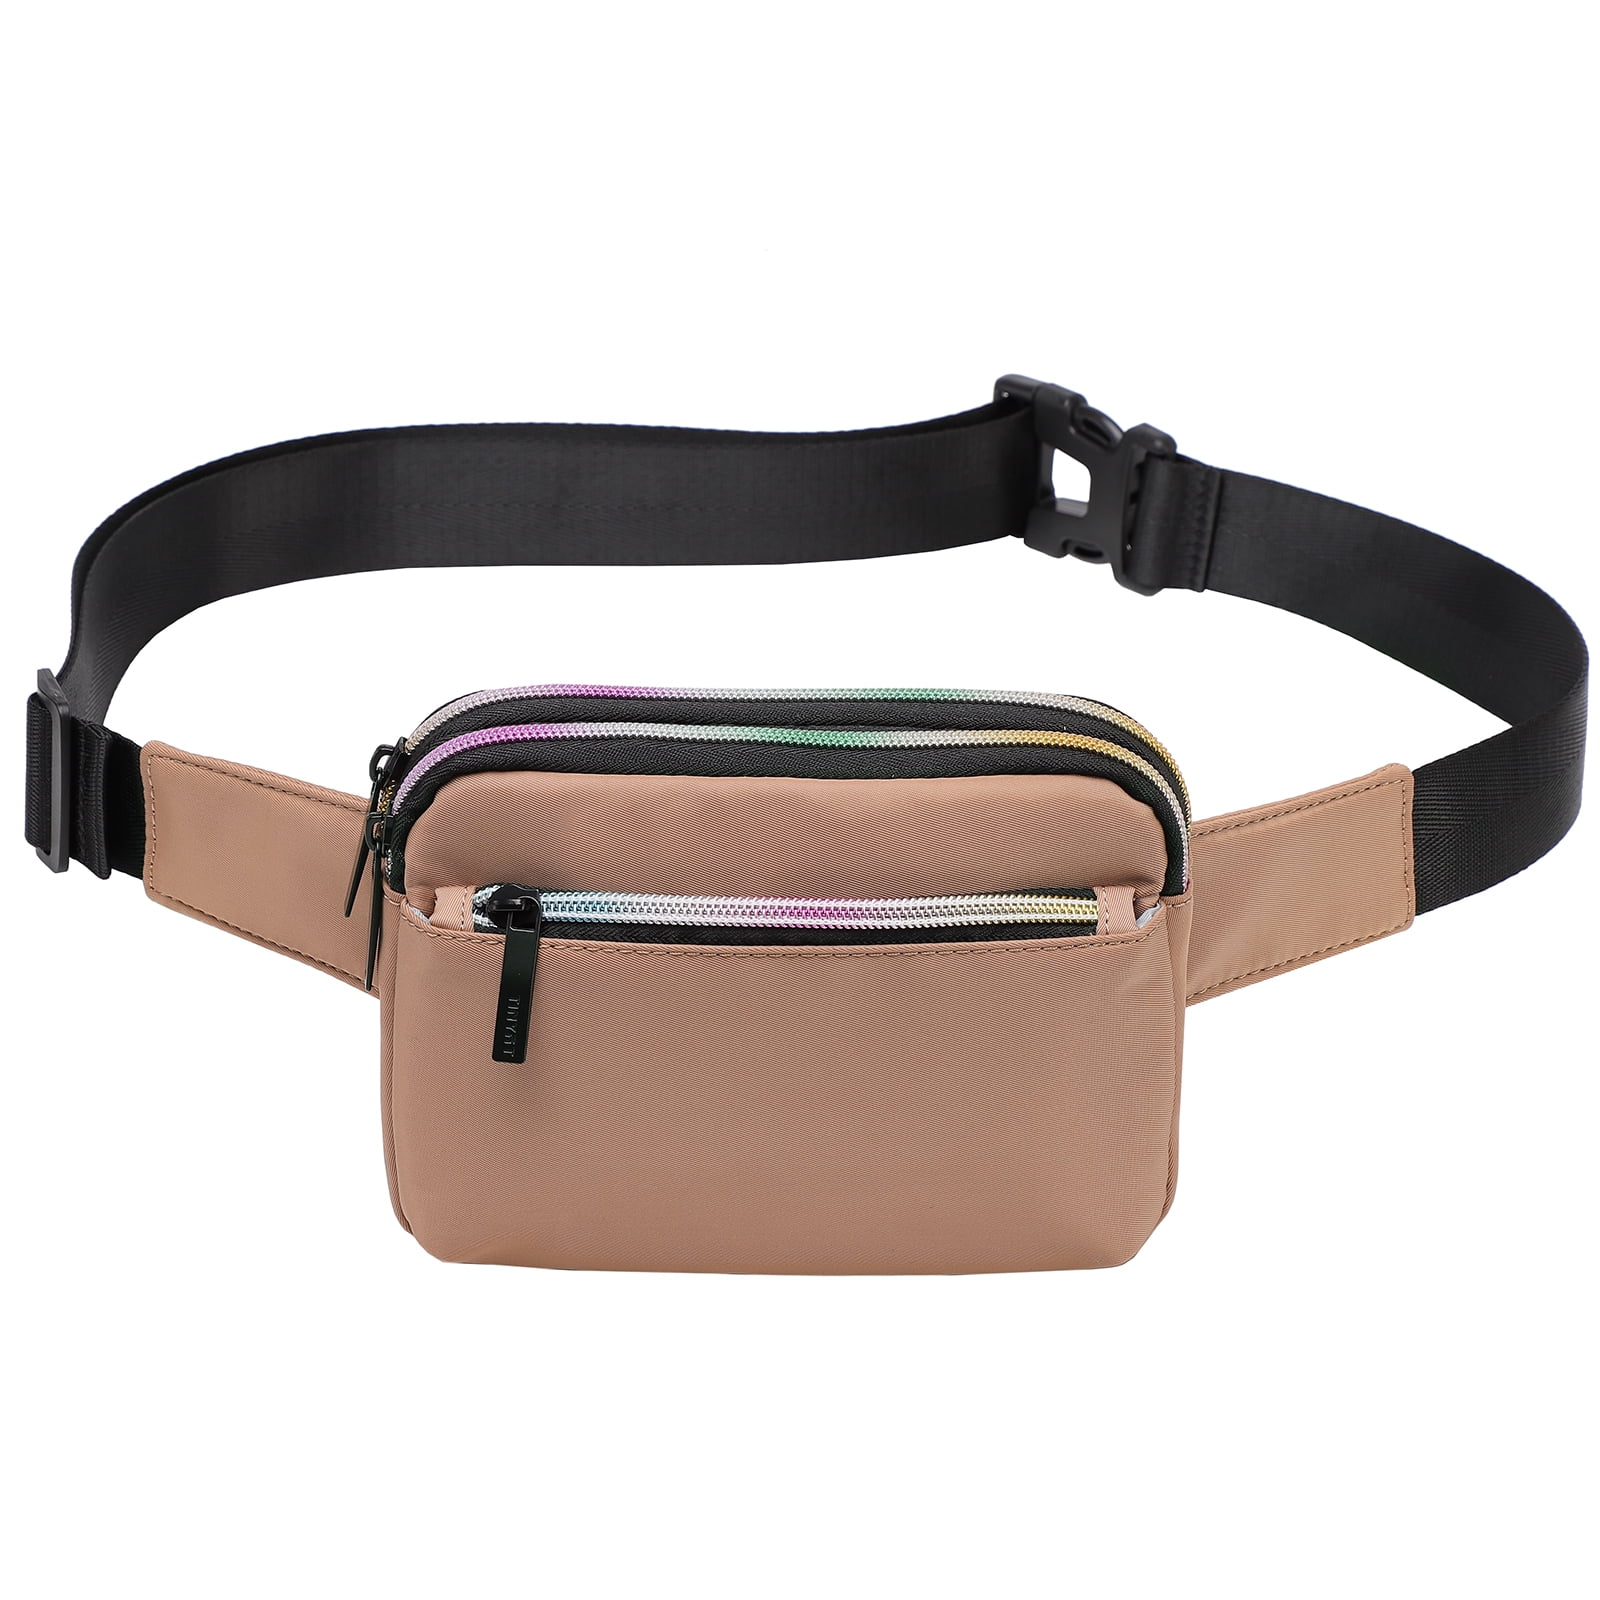 TINYAT Belt Bag for Women Nylon Fanny Pack 3-zipper Pockets Casual Bum ...